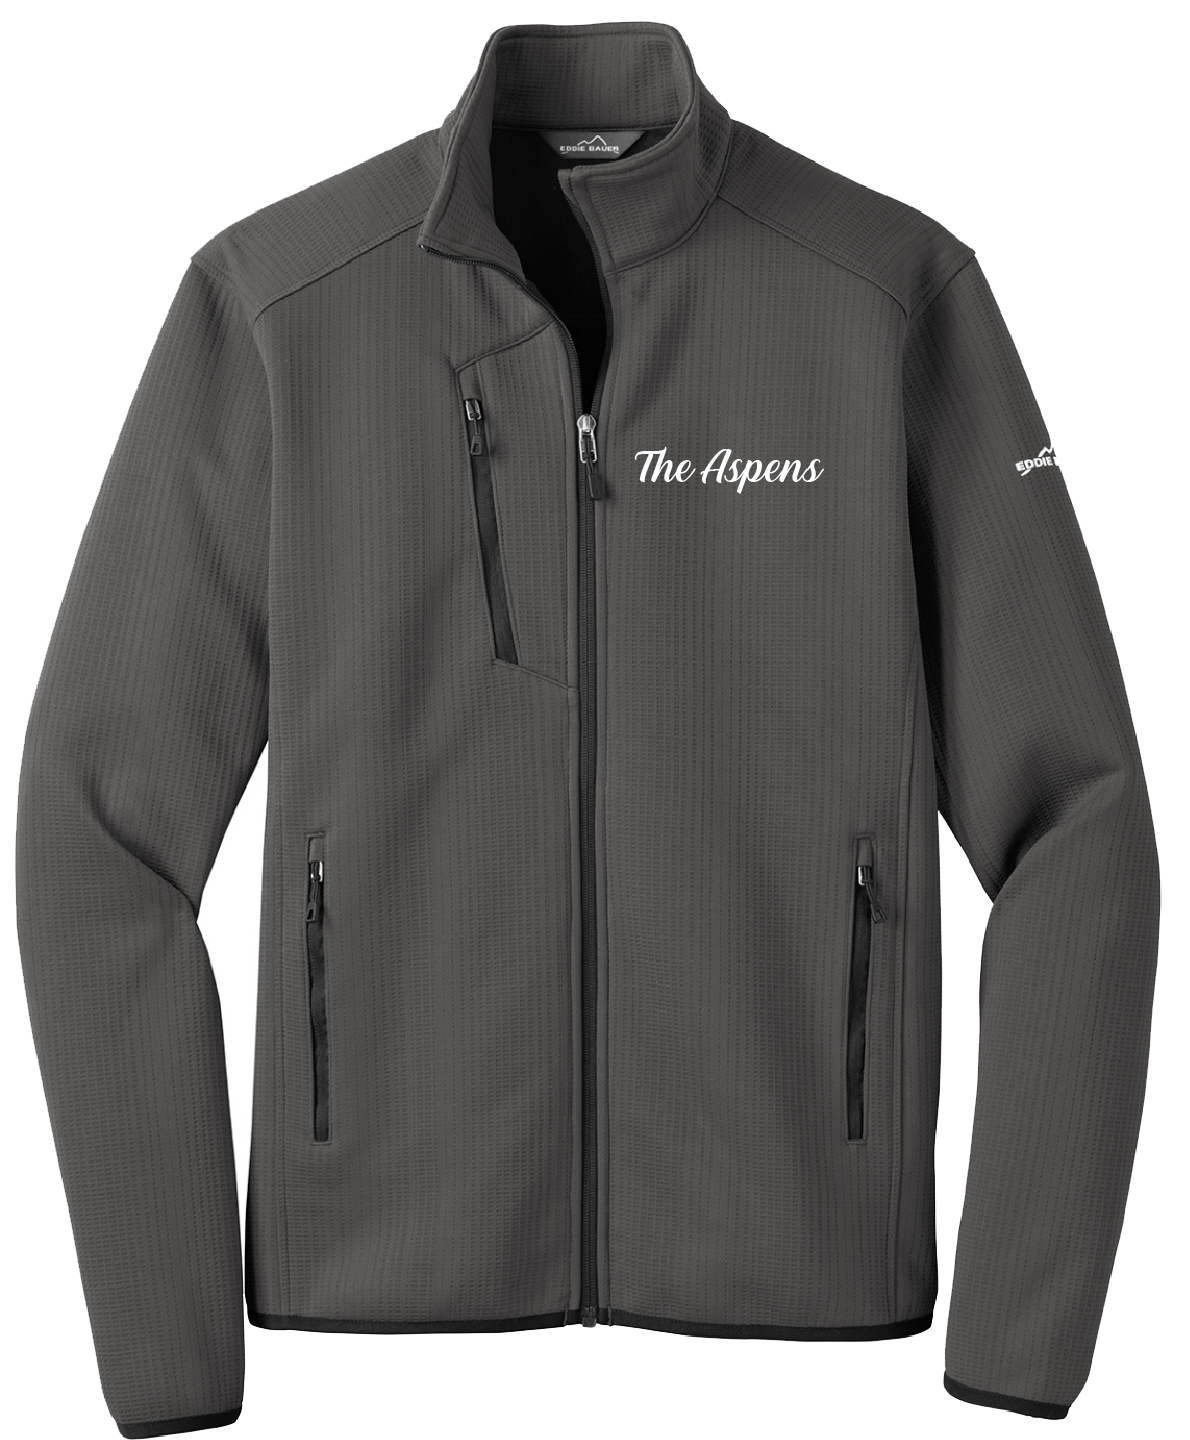 The Aspens  - Mens - Eddie Bauer ® Dash Full-Zip Fleece Jacket